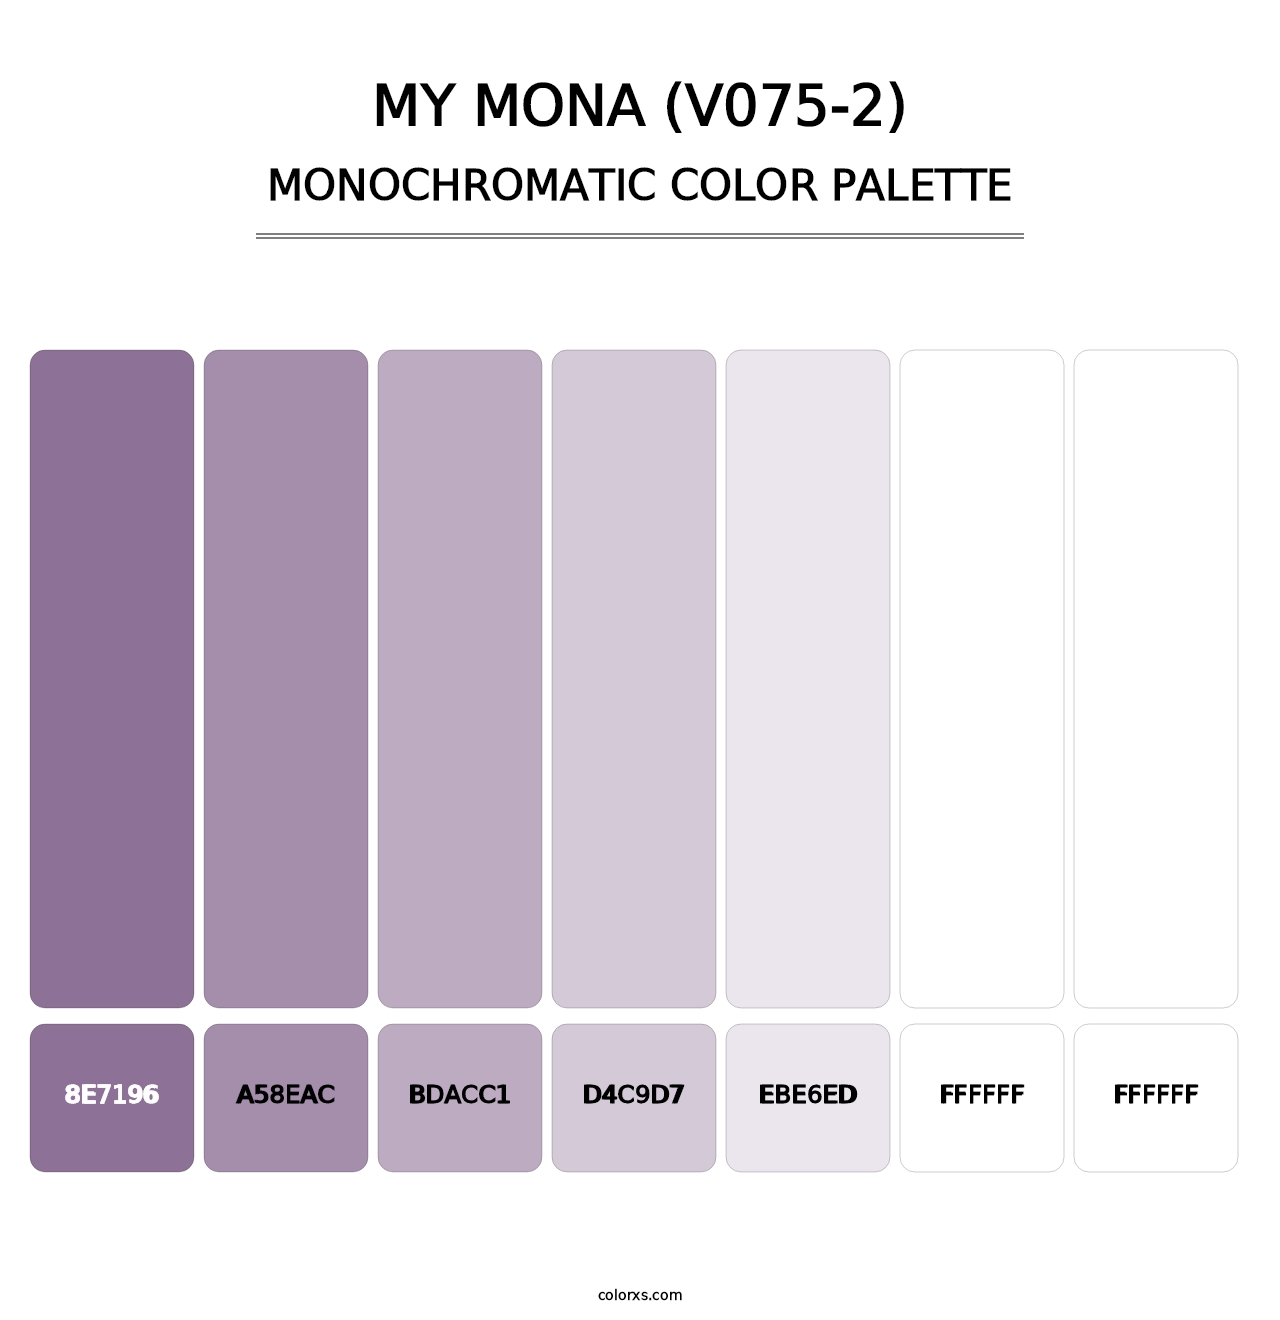 My Mona (V075-2) - Monochromatic Color Palette